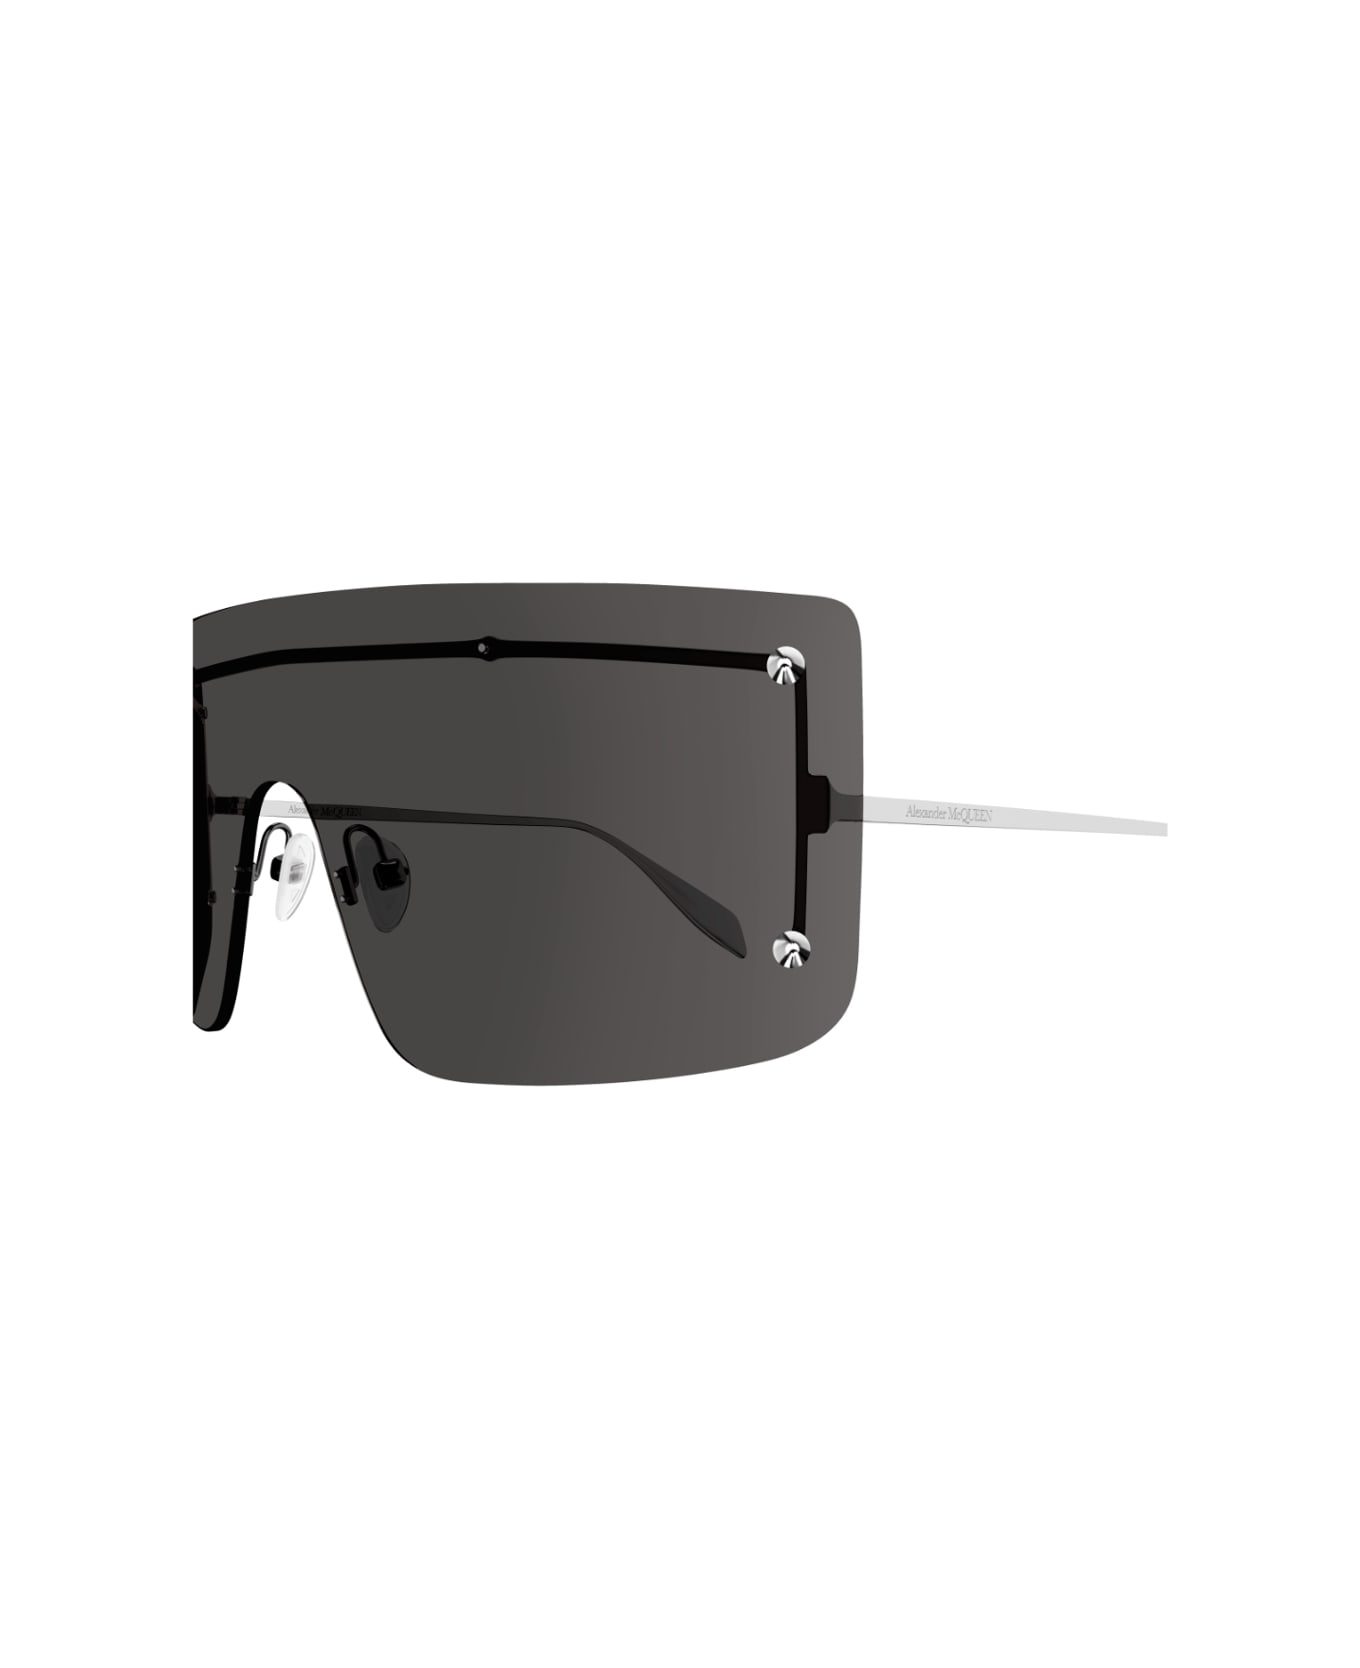 Alexander McQueen Eyewear AM0412s 001 Sunglasses サングラス